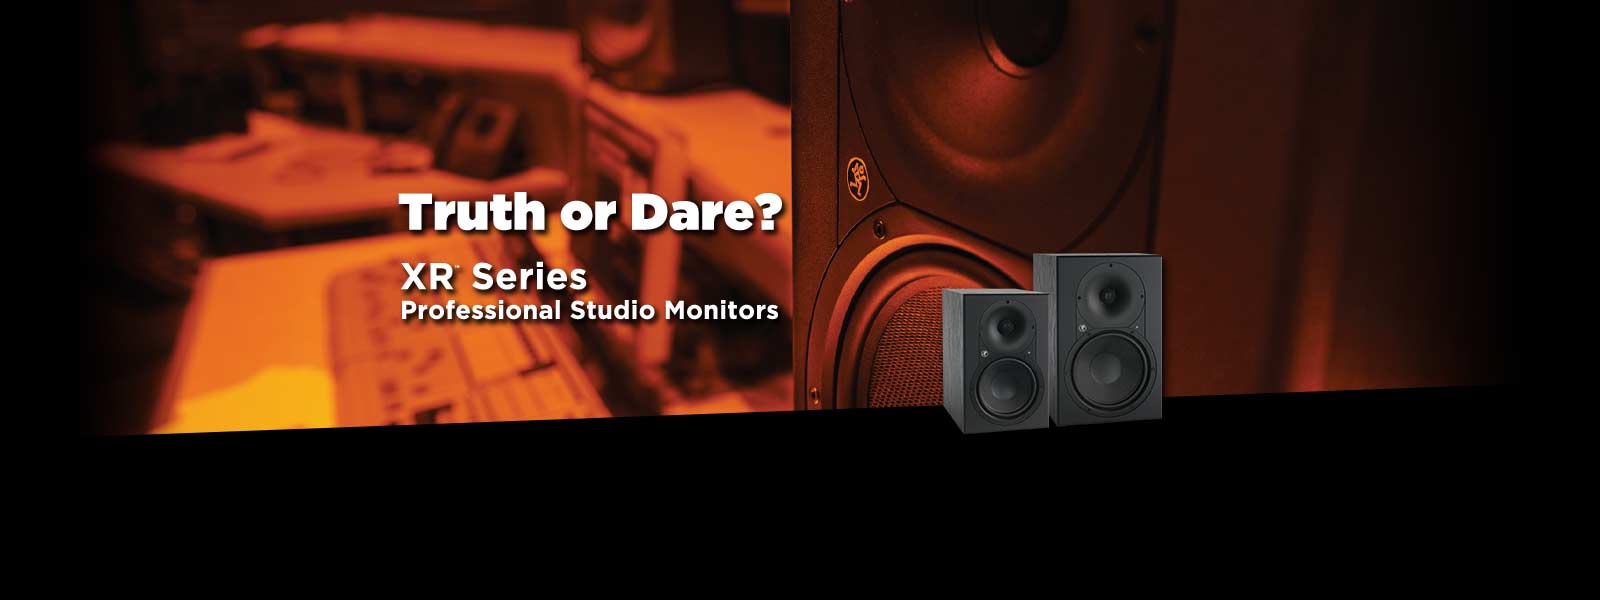 XR series professional studio monitors